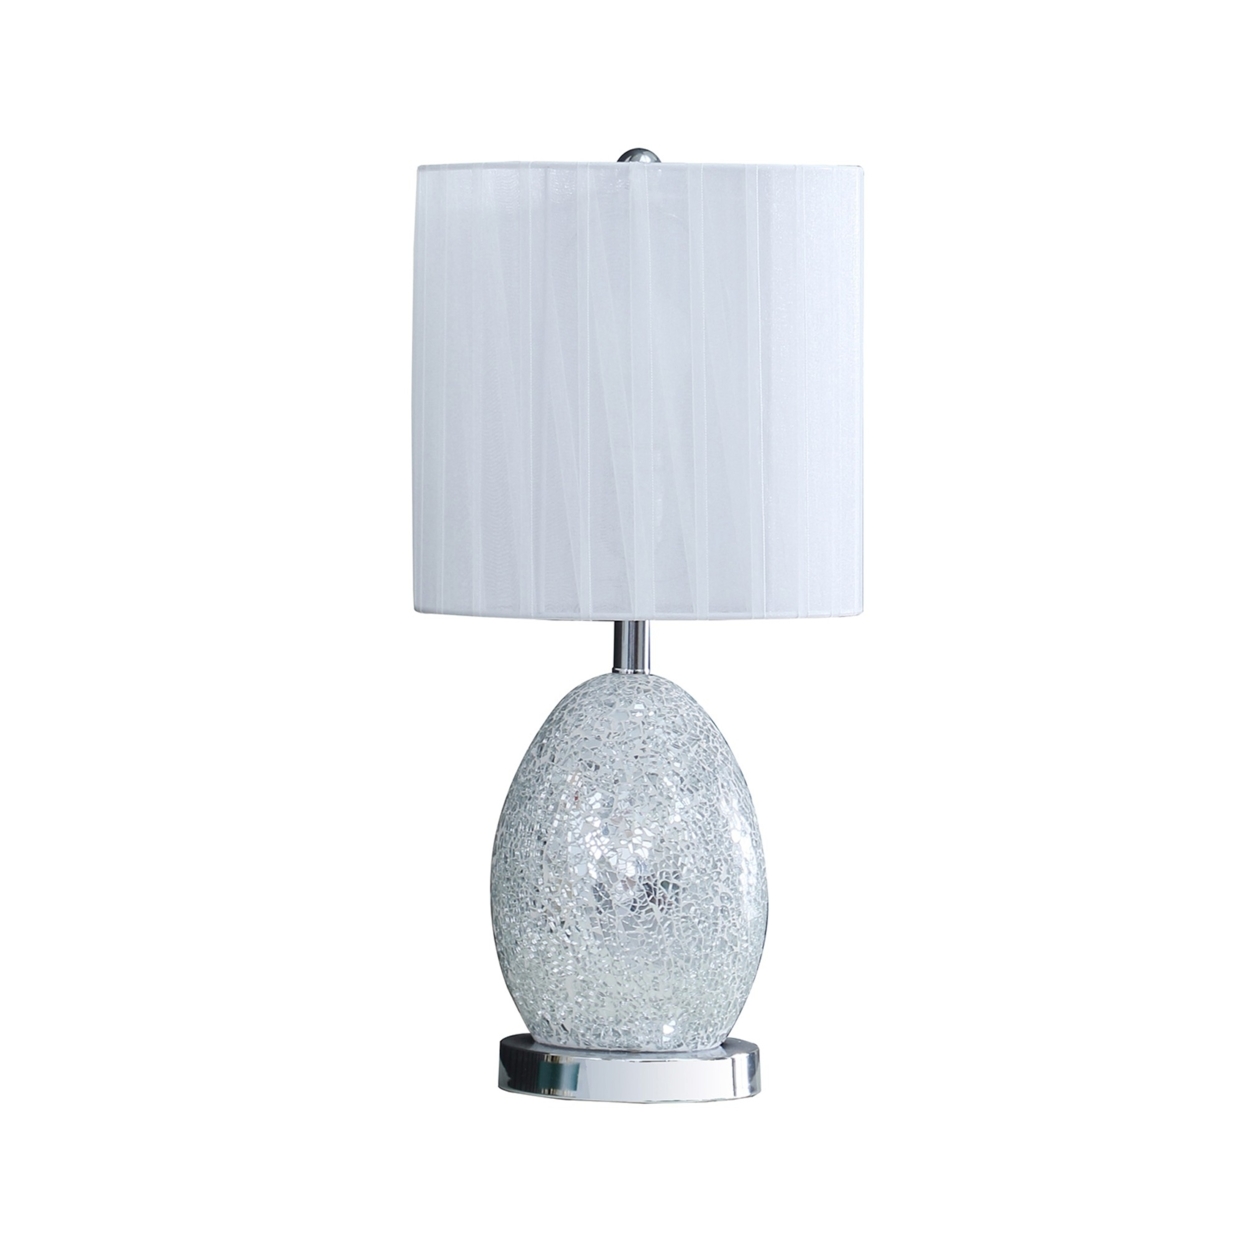 20 Inch Glass Table Lamp, 9W LED, 3 Way Switch, Egg Shape, Silver- Saltoro Sherpi